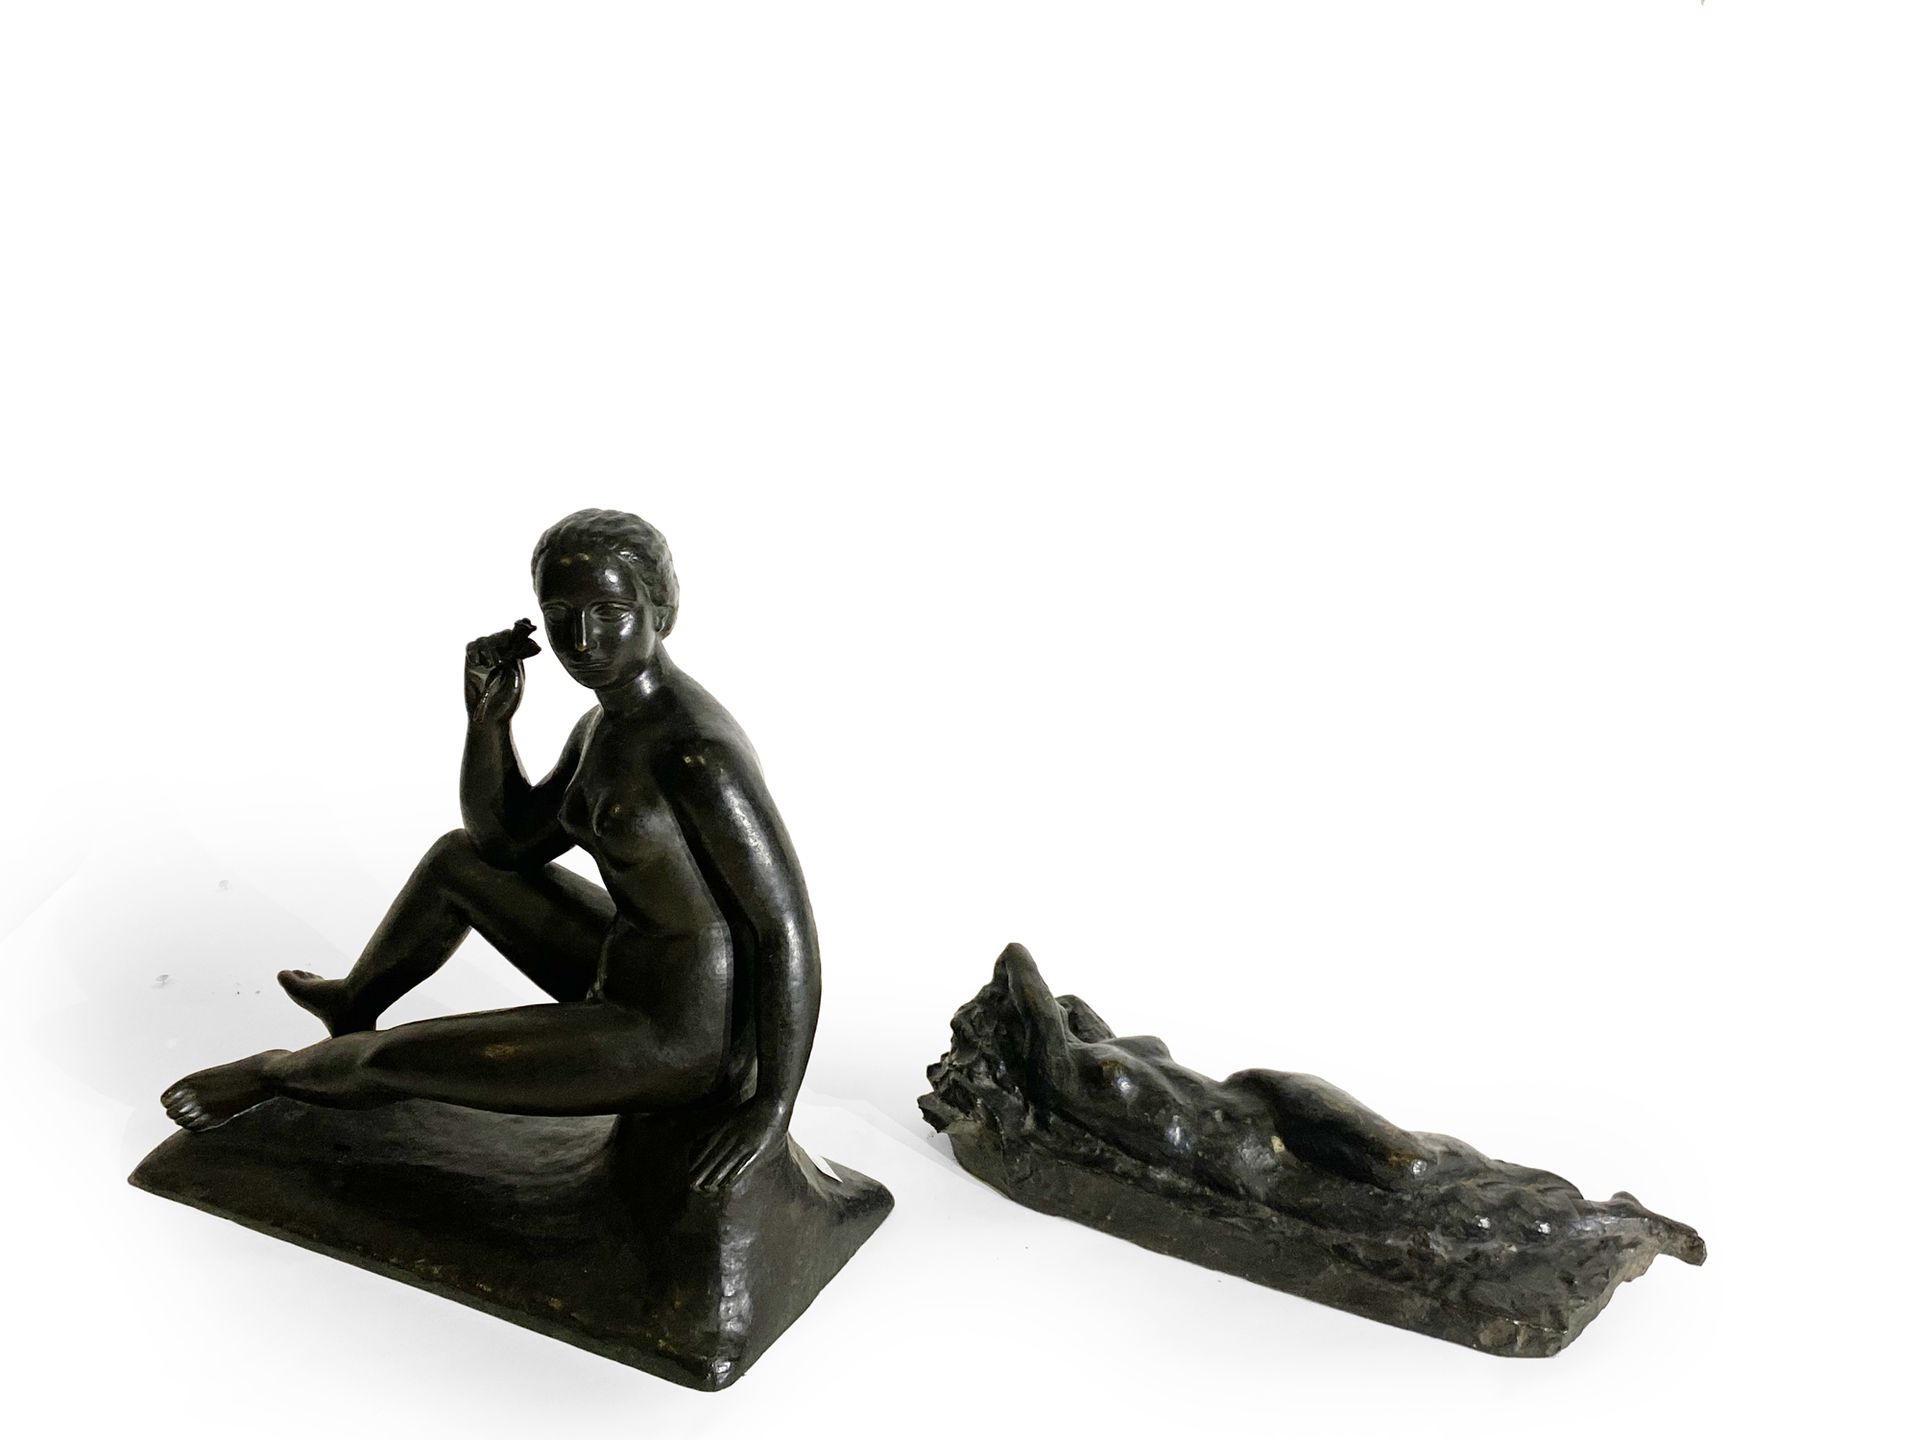 Null Conjunto de dos esculturas: 

- Escultura de bronce de un desnudo reclinado&hellip;